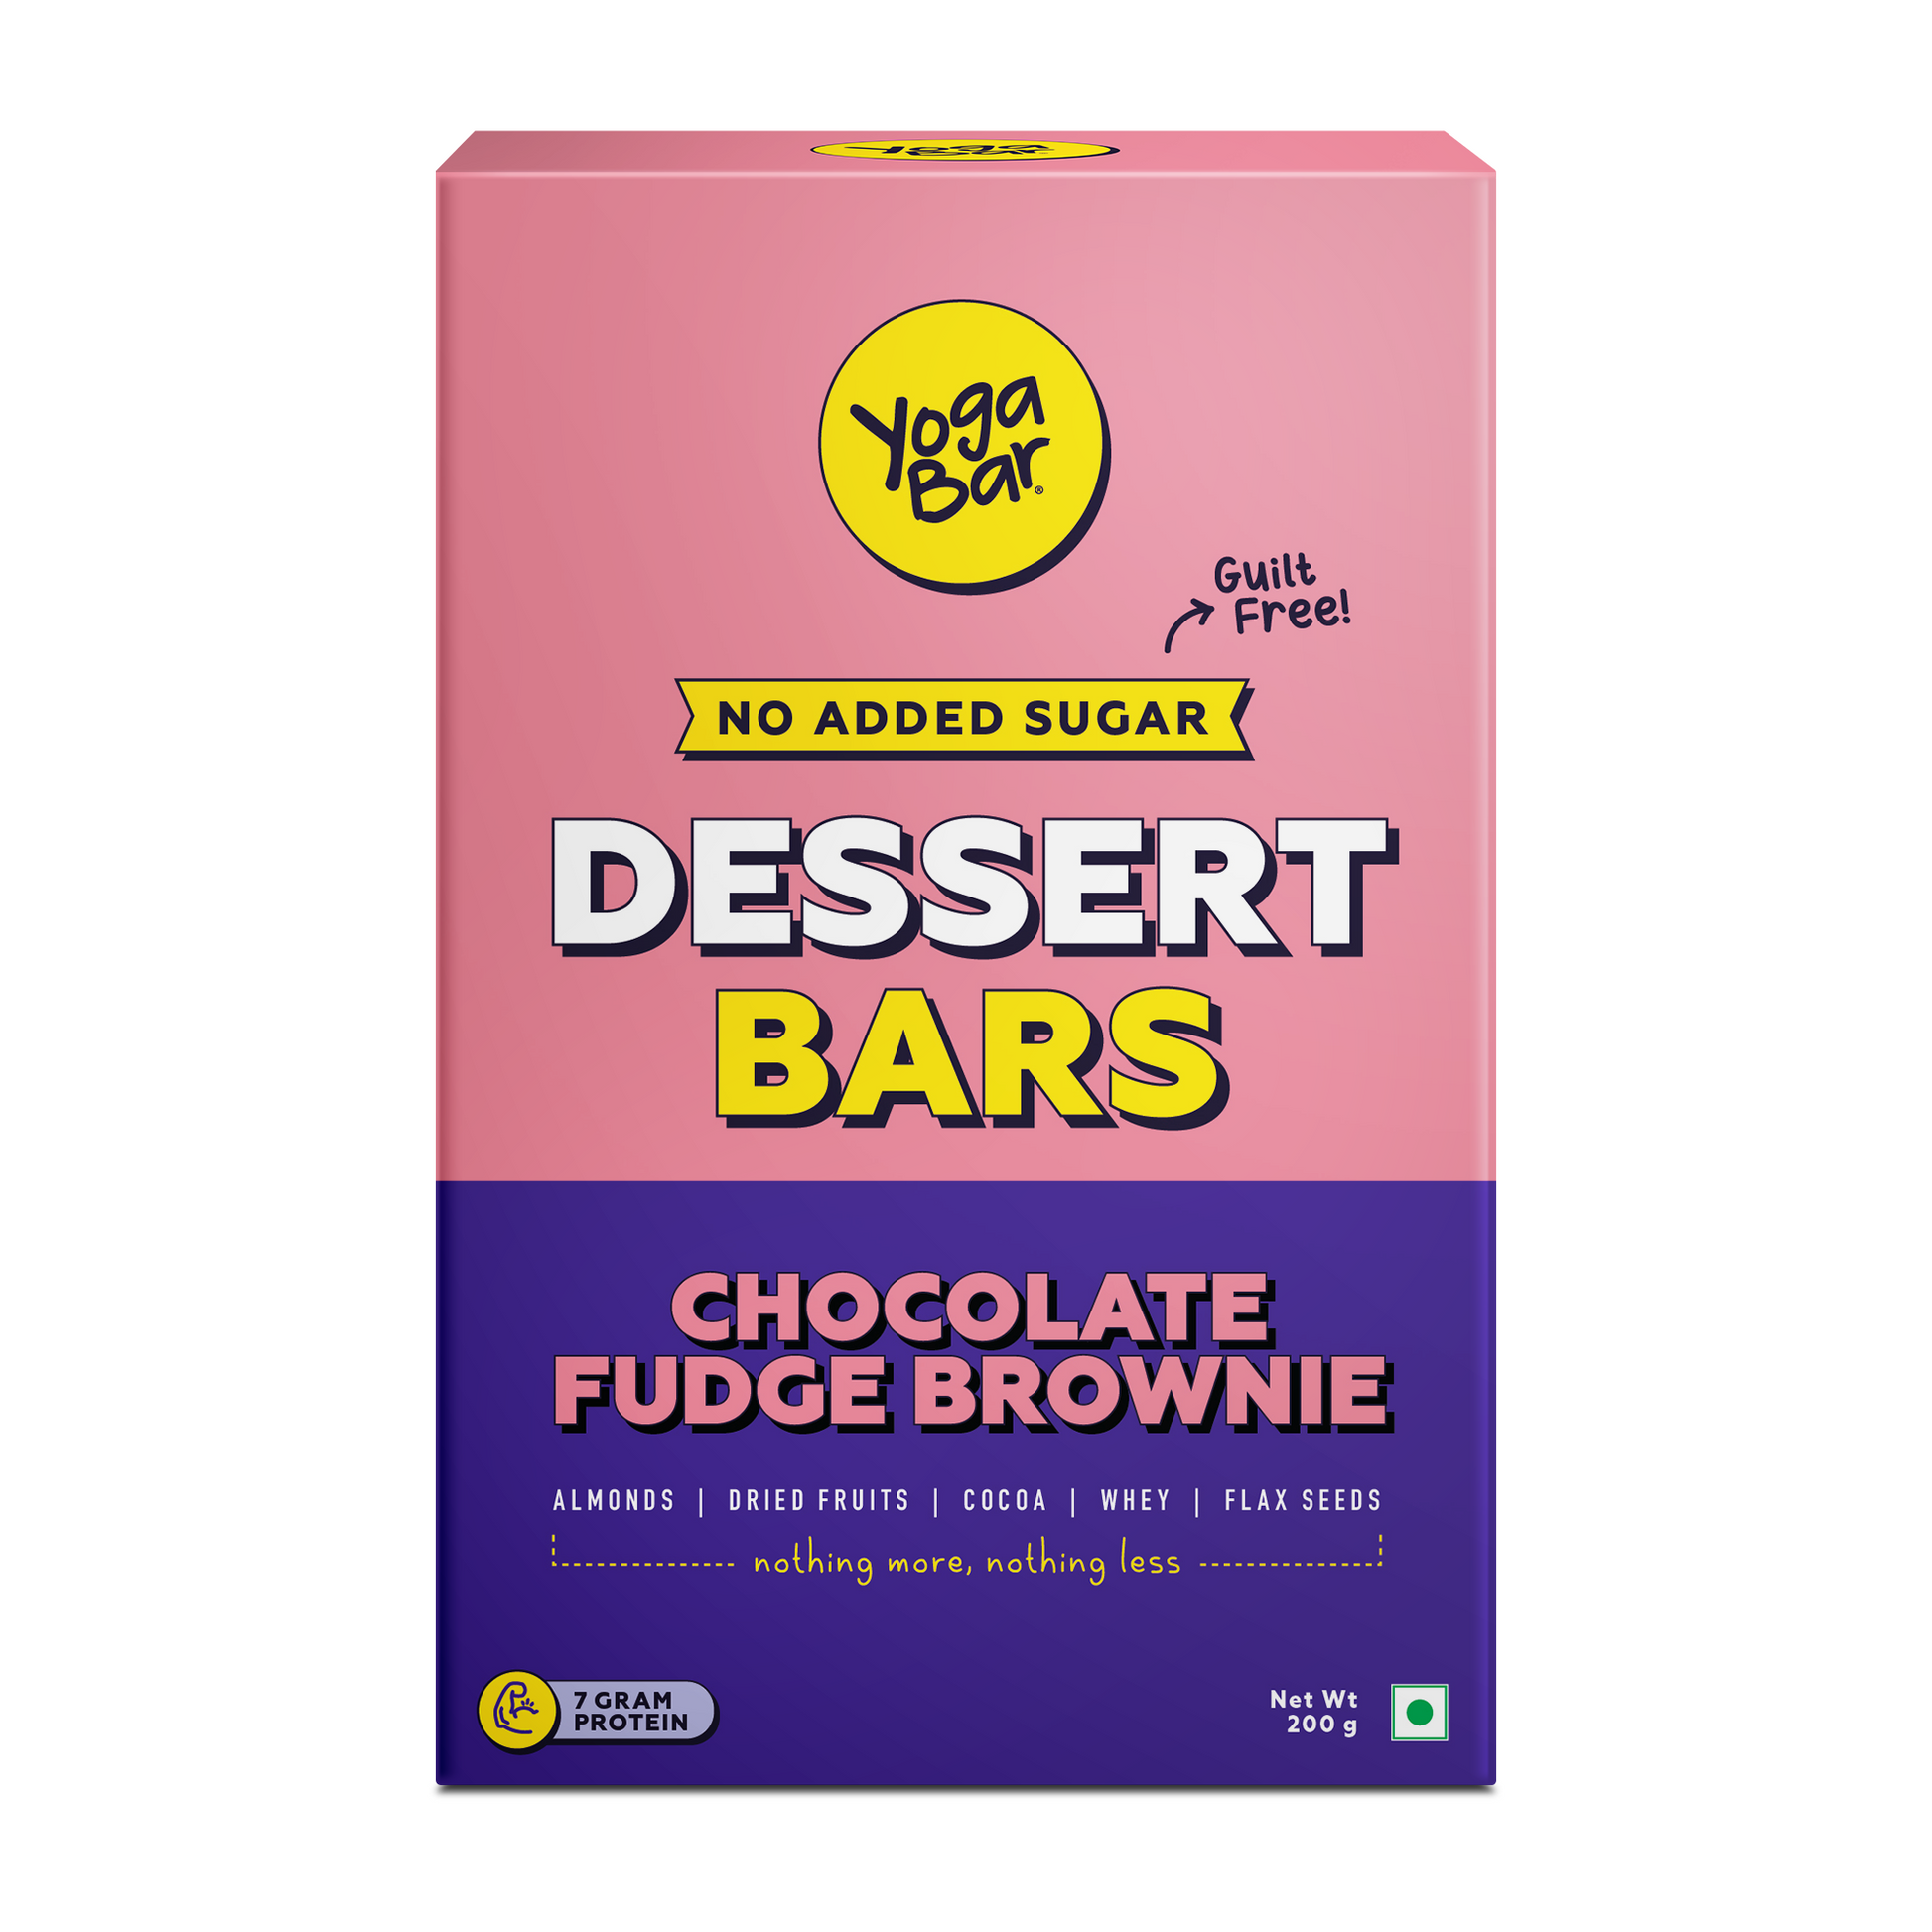 Yogabar Dessert Protein Bar - No Added Sugar Snacks